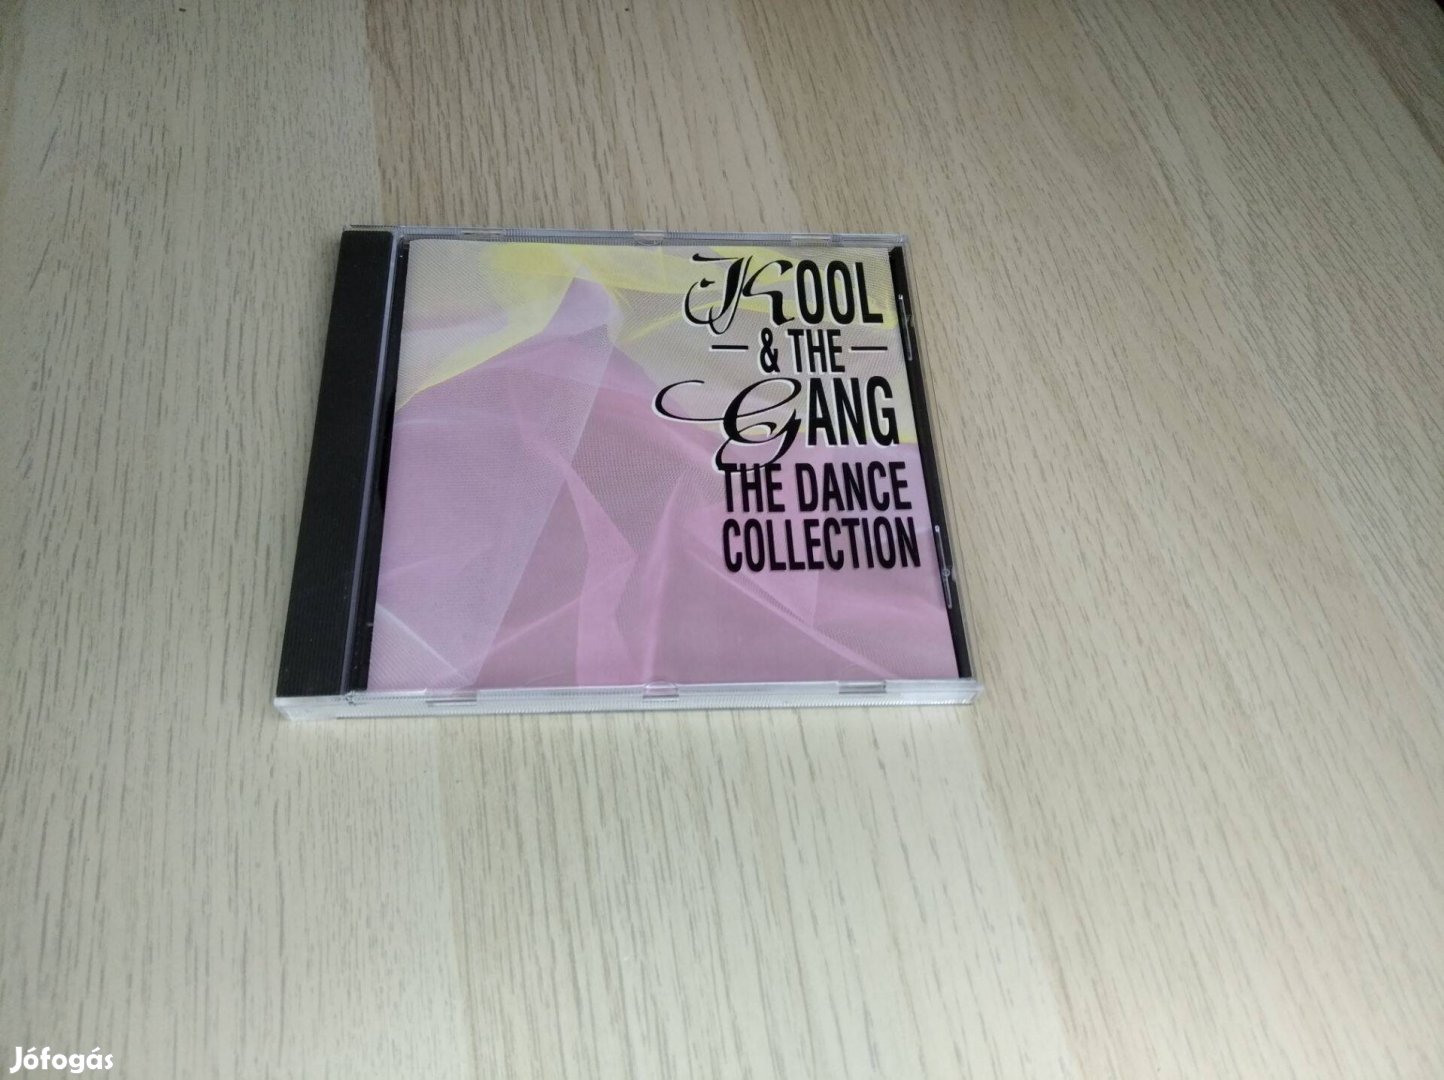 Kool & The Gang - The Dance Collection / CD